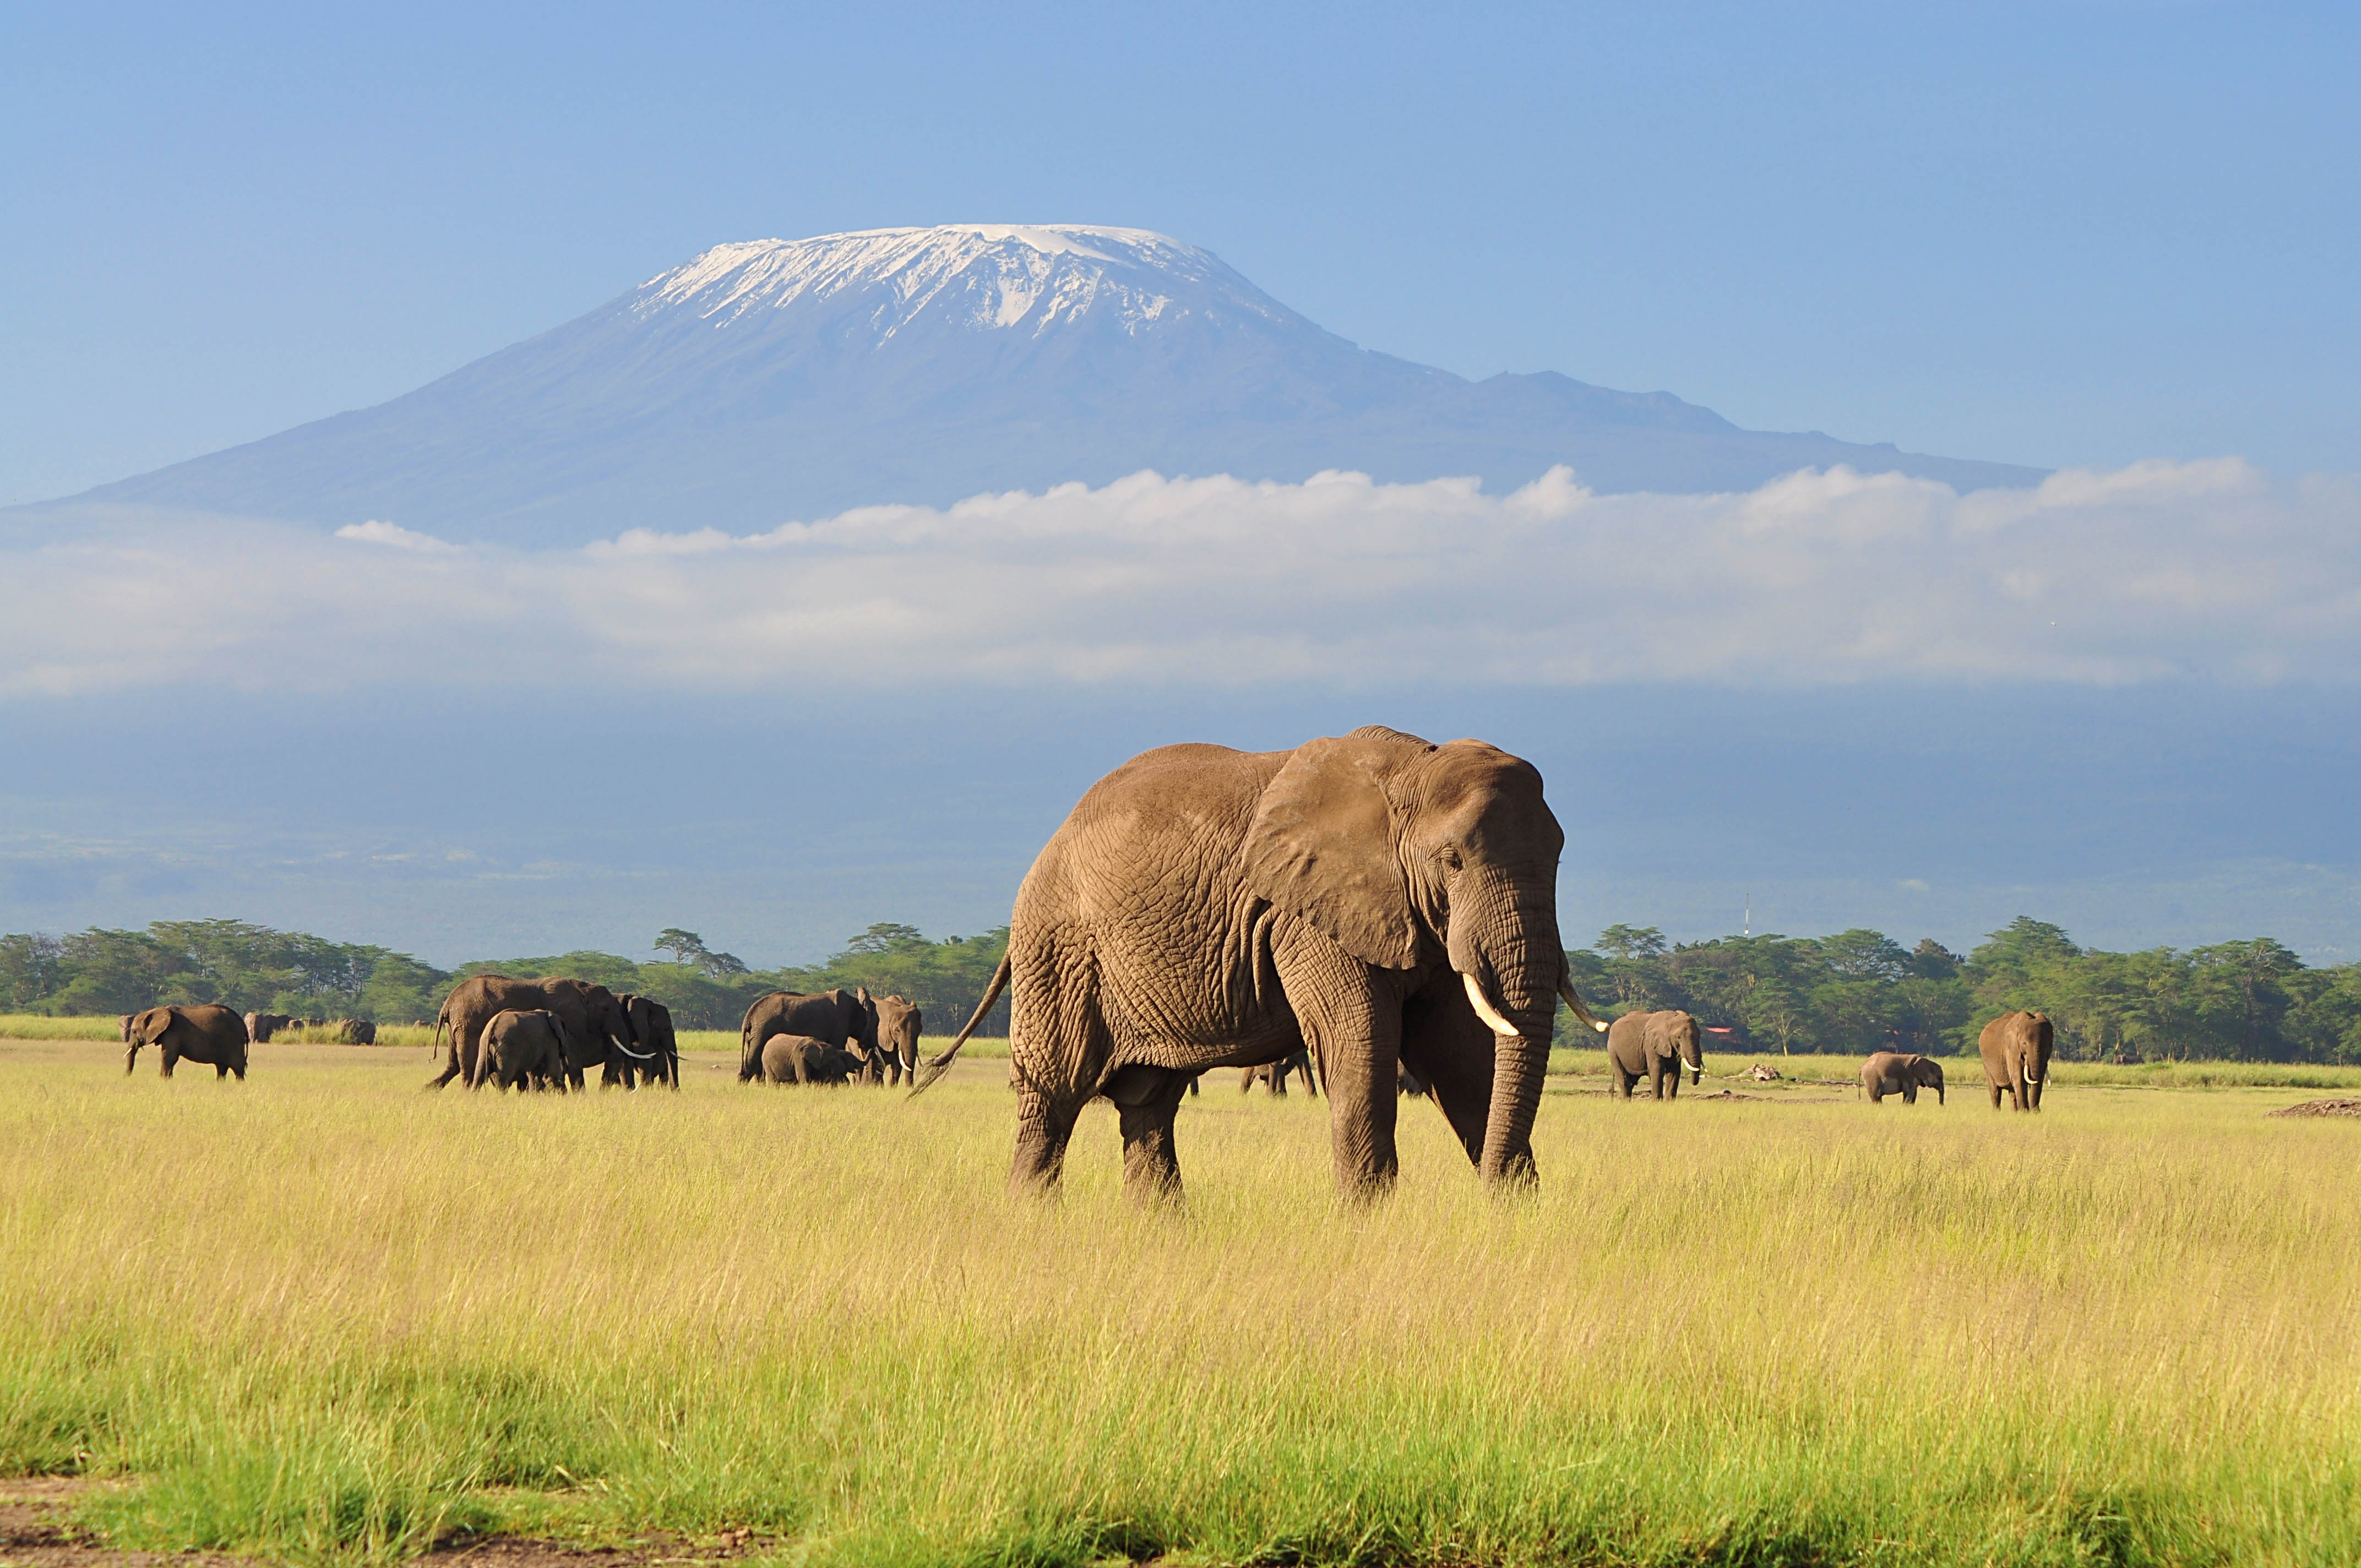 Elephants near Mt. Kilimanjaro, Tanzania